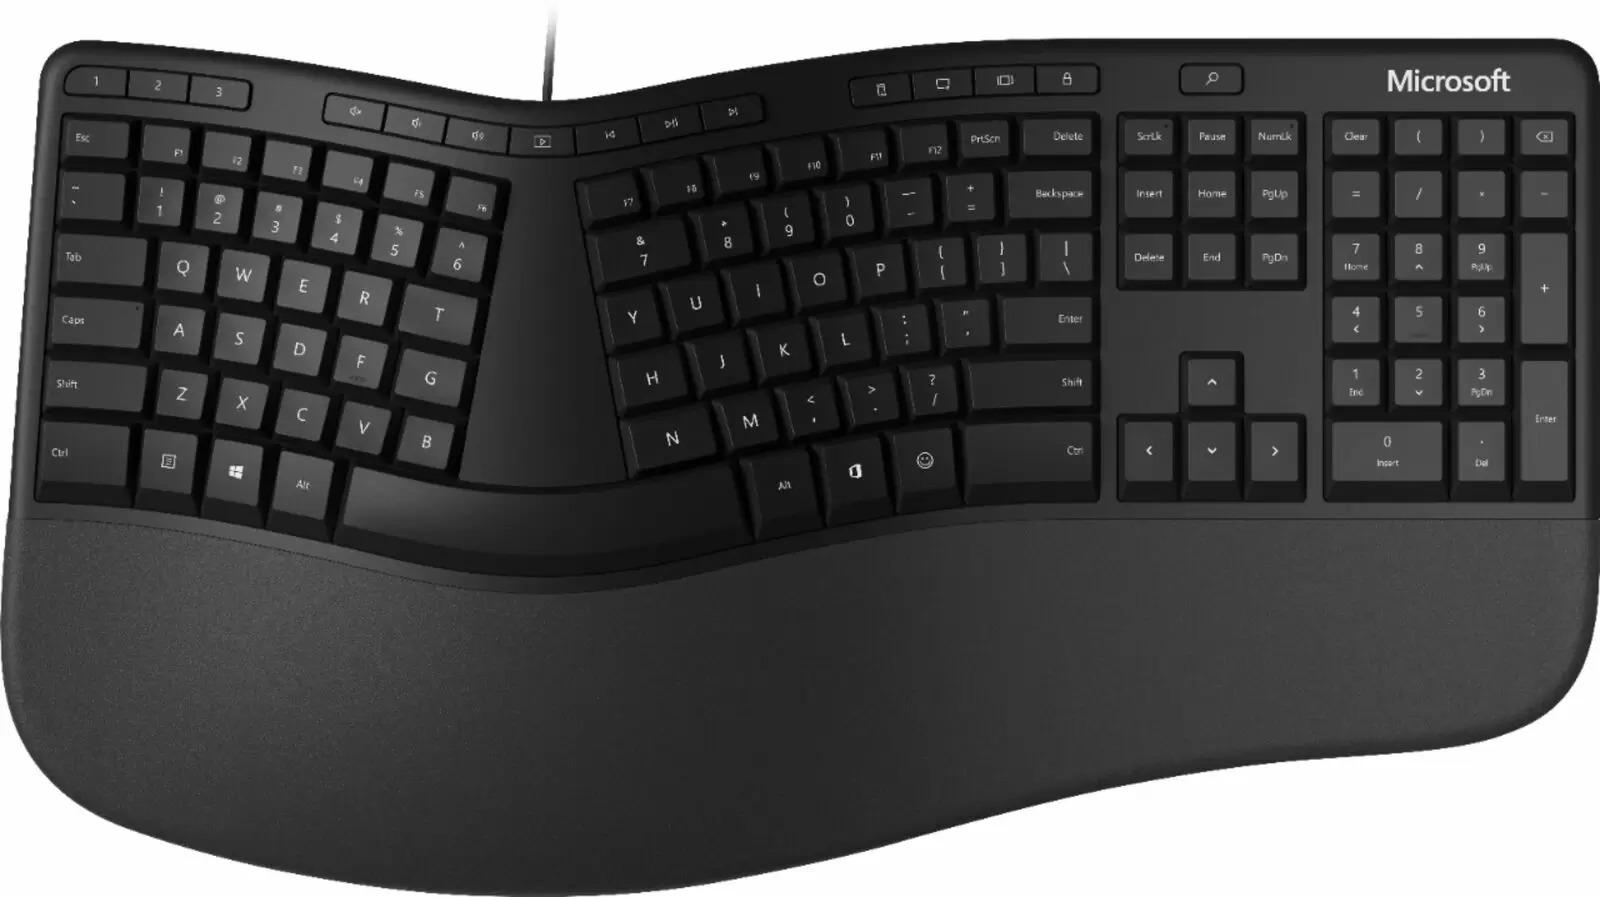 Microsoft Ergonomic Wired Keyboard for $29.99 Shipped